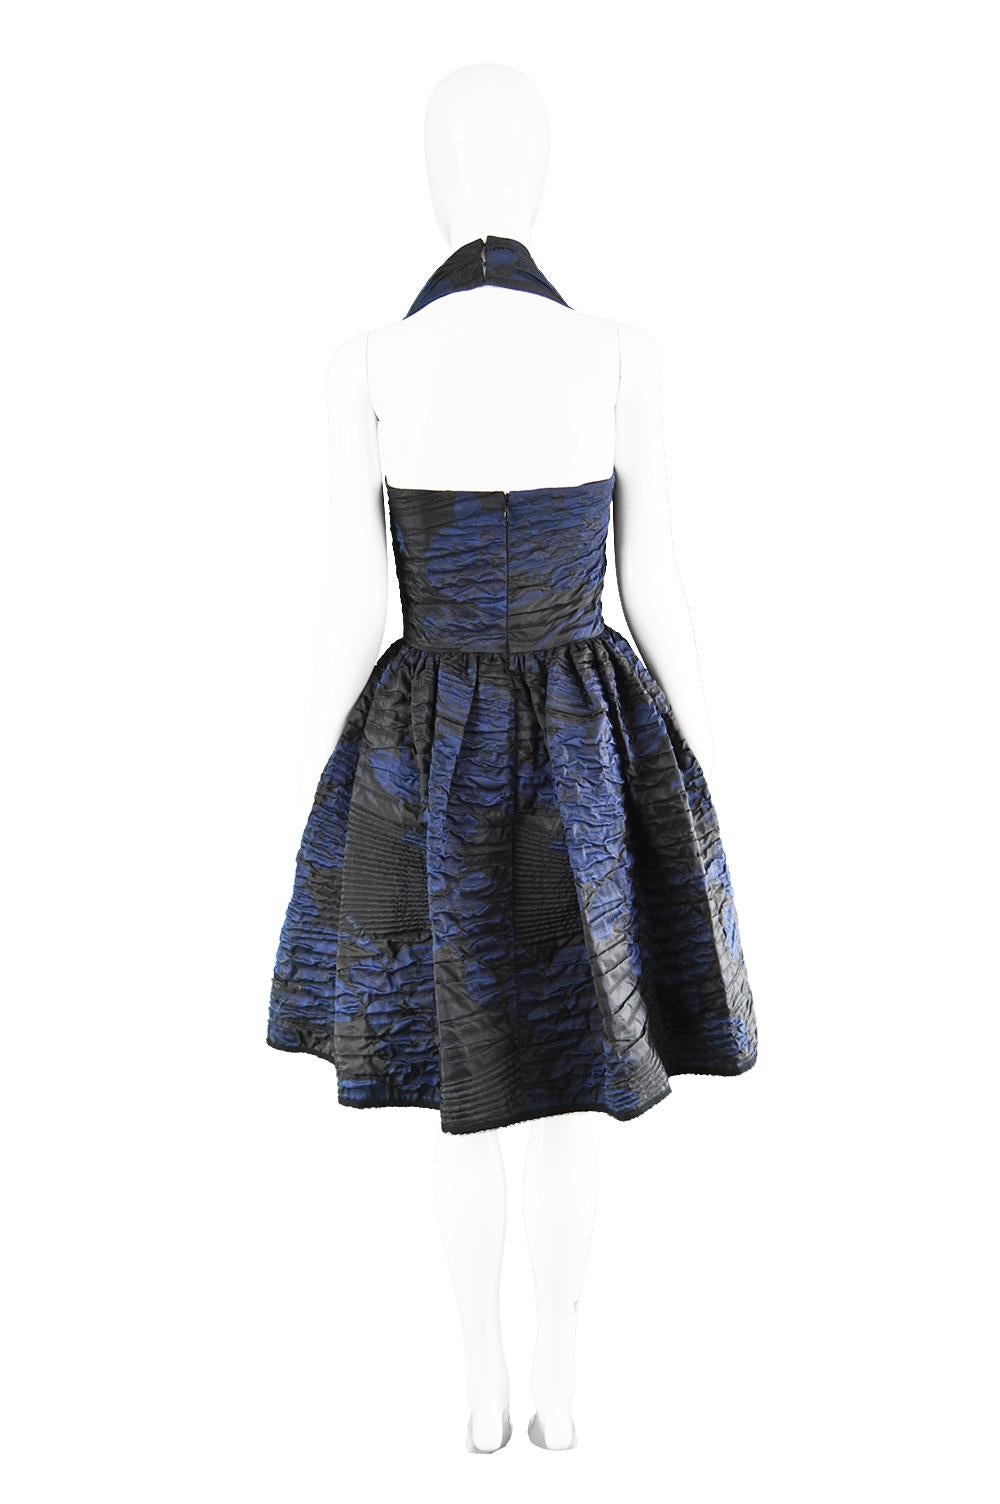 Oscar de la Renta Blue & Black Textured Silk Blend Evening Party Dress, 2010 For Sale 3